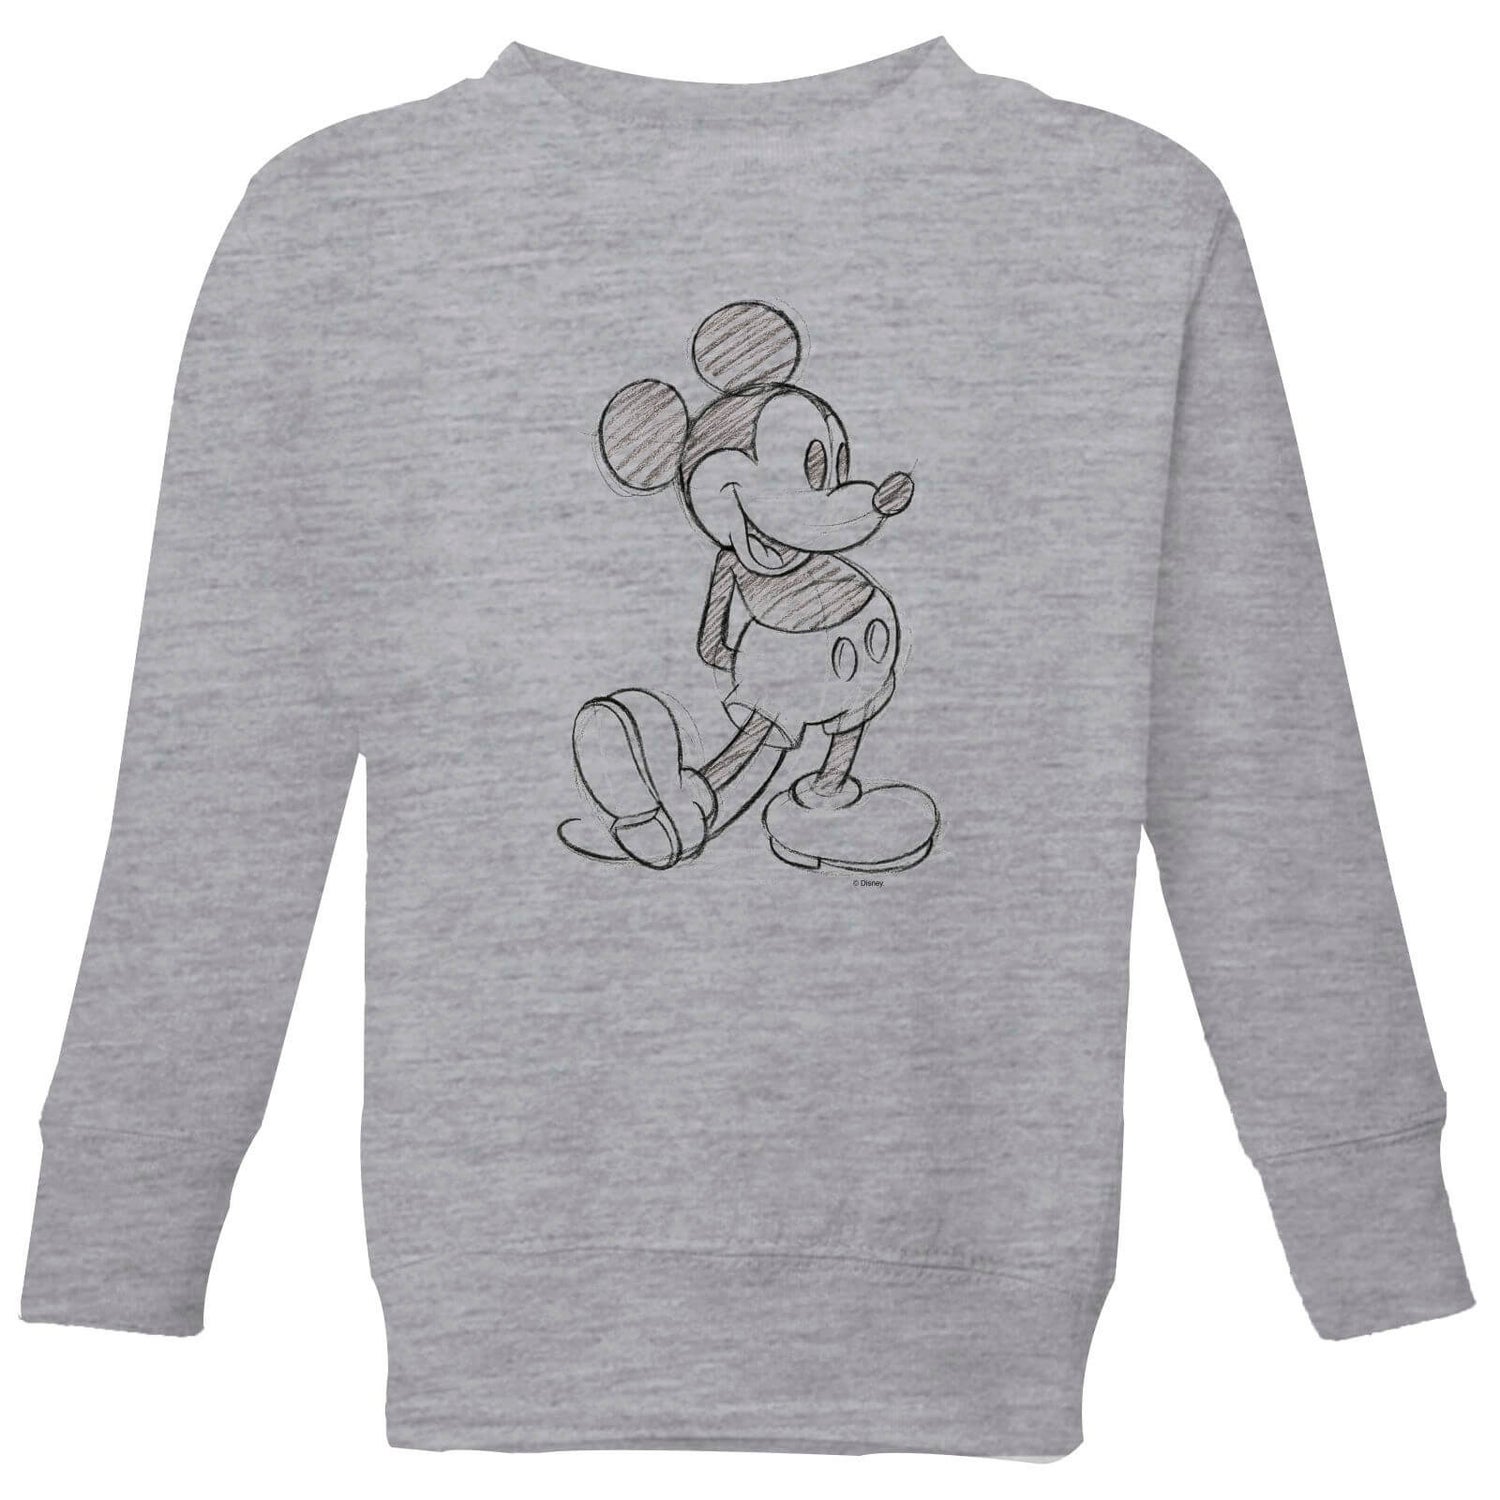 Disney Mickey Mouse Sketch Kids' Sweatshirt - Grey